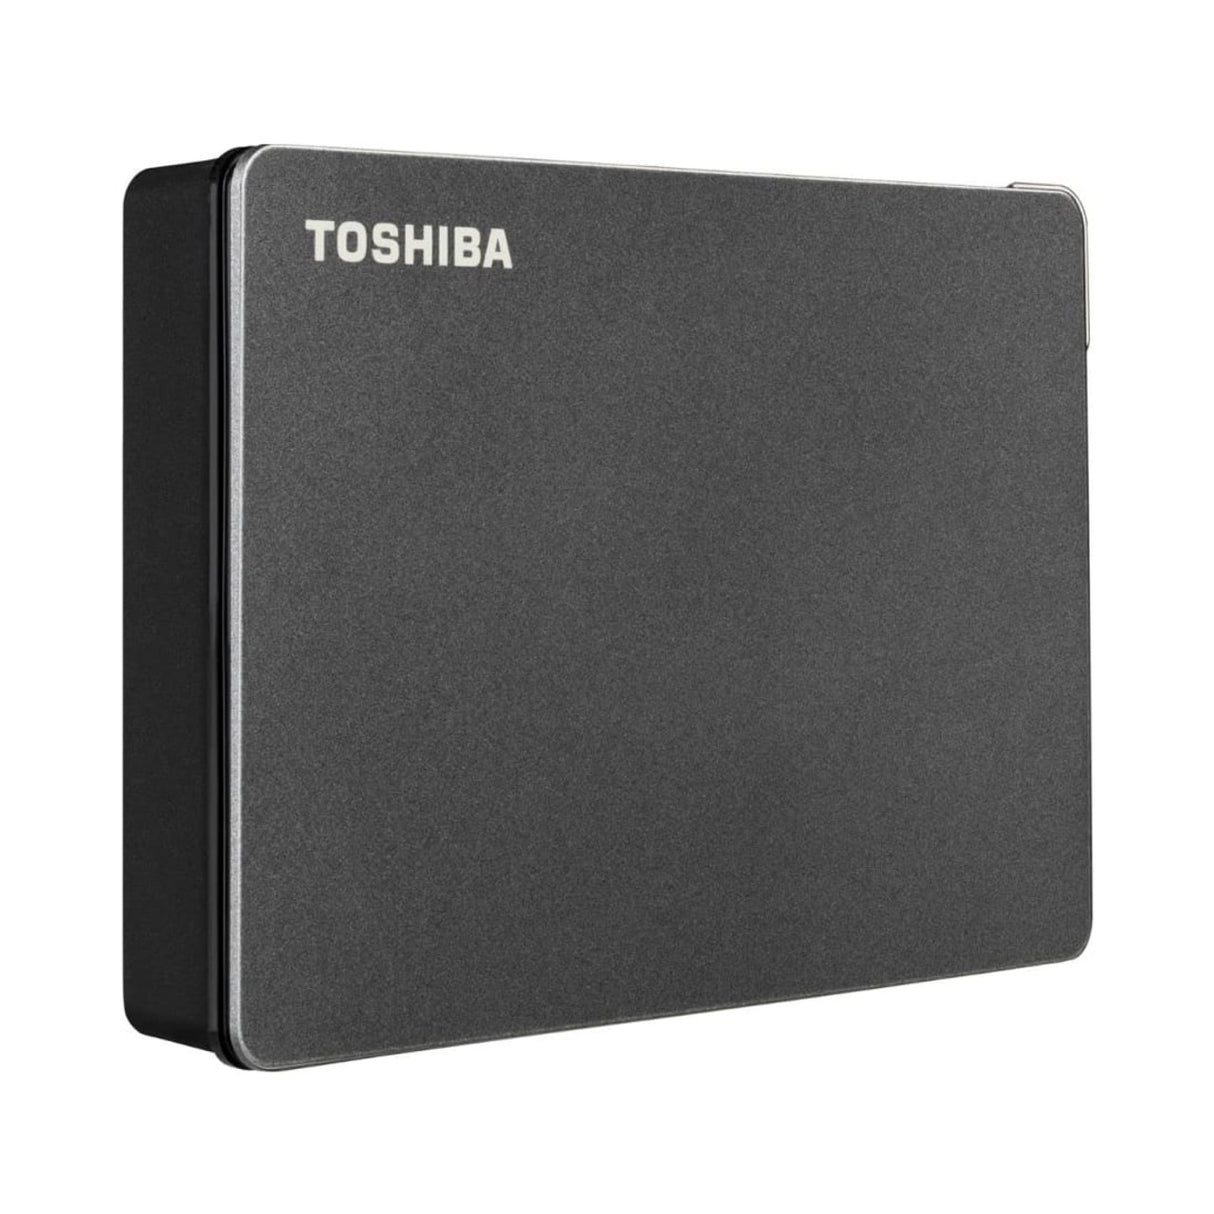 Toshiba Canvio Gaming Portable External Hard Drive 1TB Black –